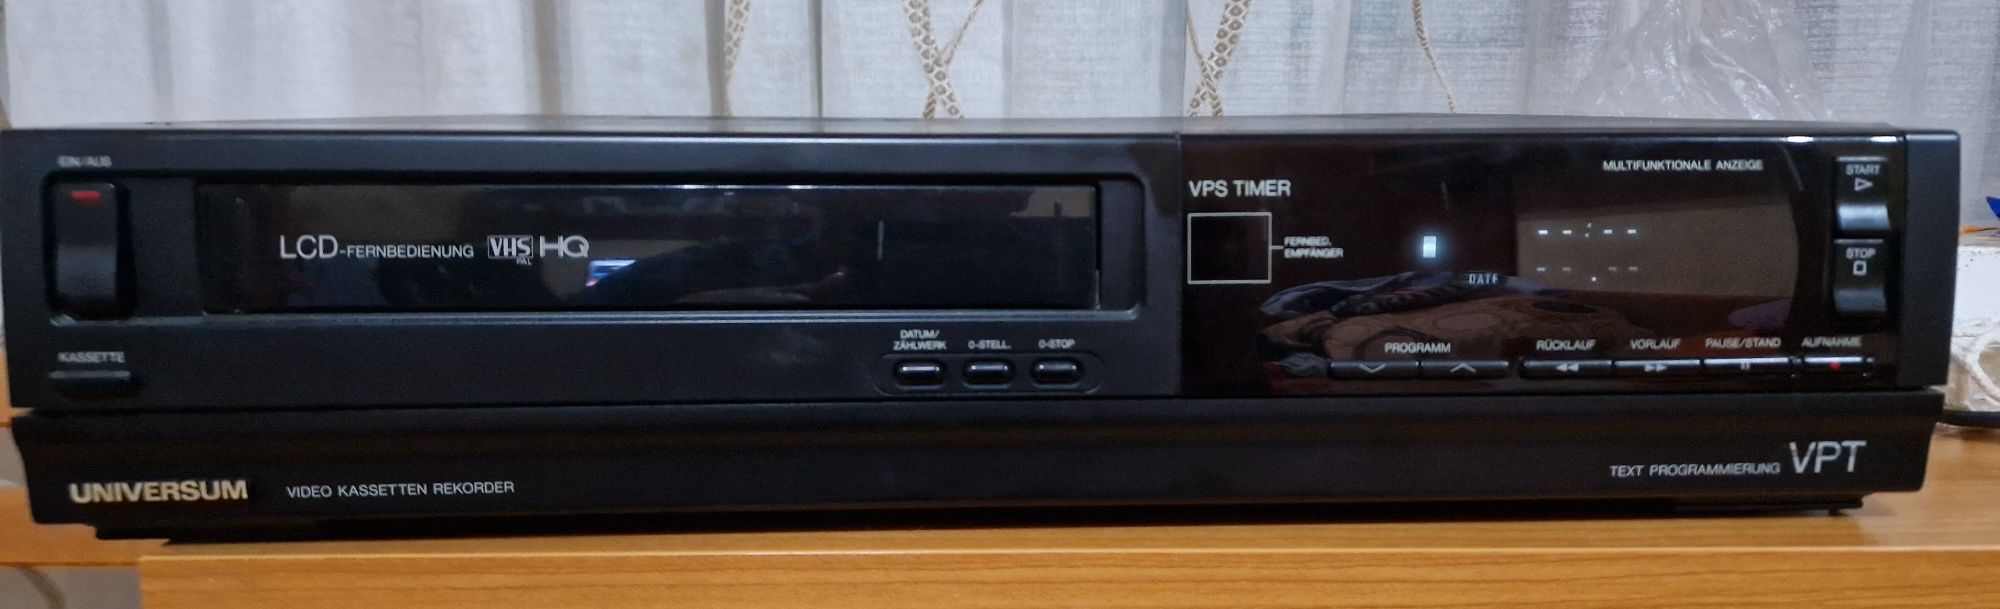 Aparat Video Recorder. VHS.Univesum.